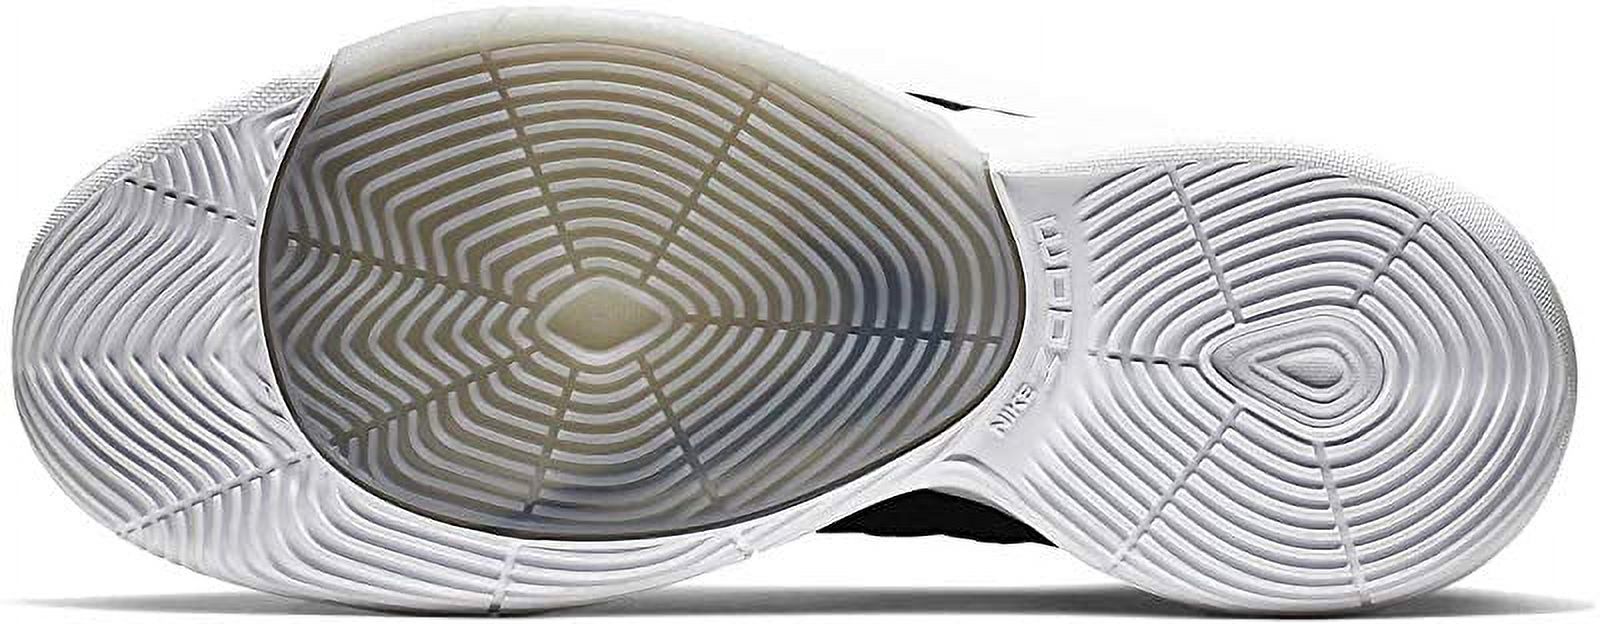 Nike Men's Zoom Rize TB Basketball Shoe, BQ5468-001 Black/White, 12 US - image 4 of 4